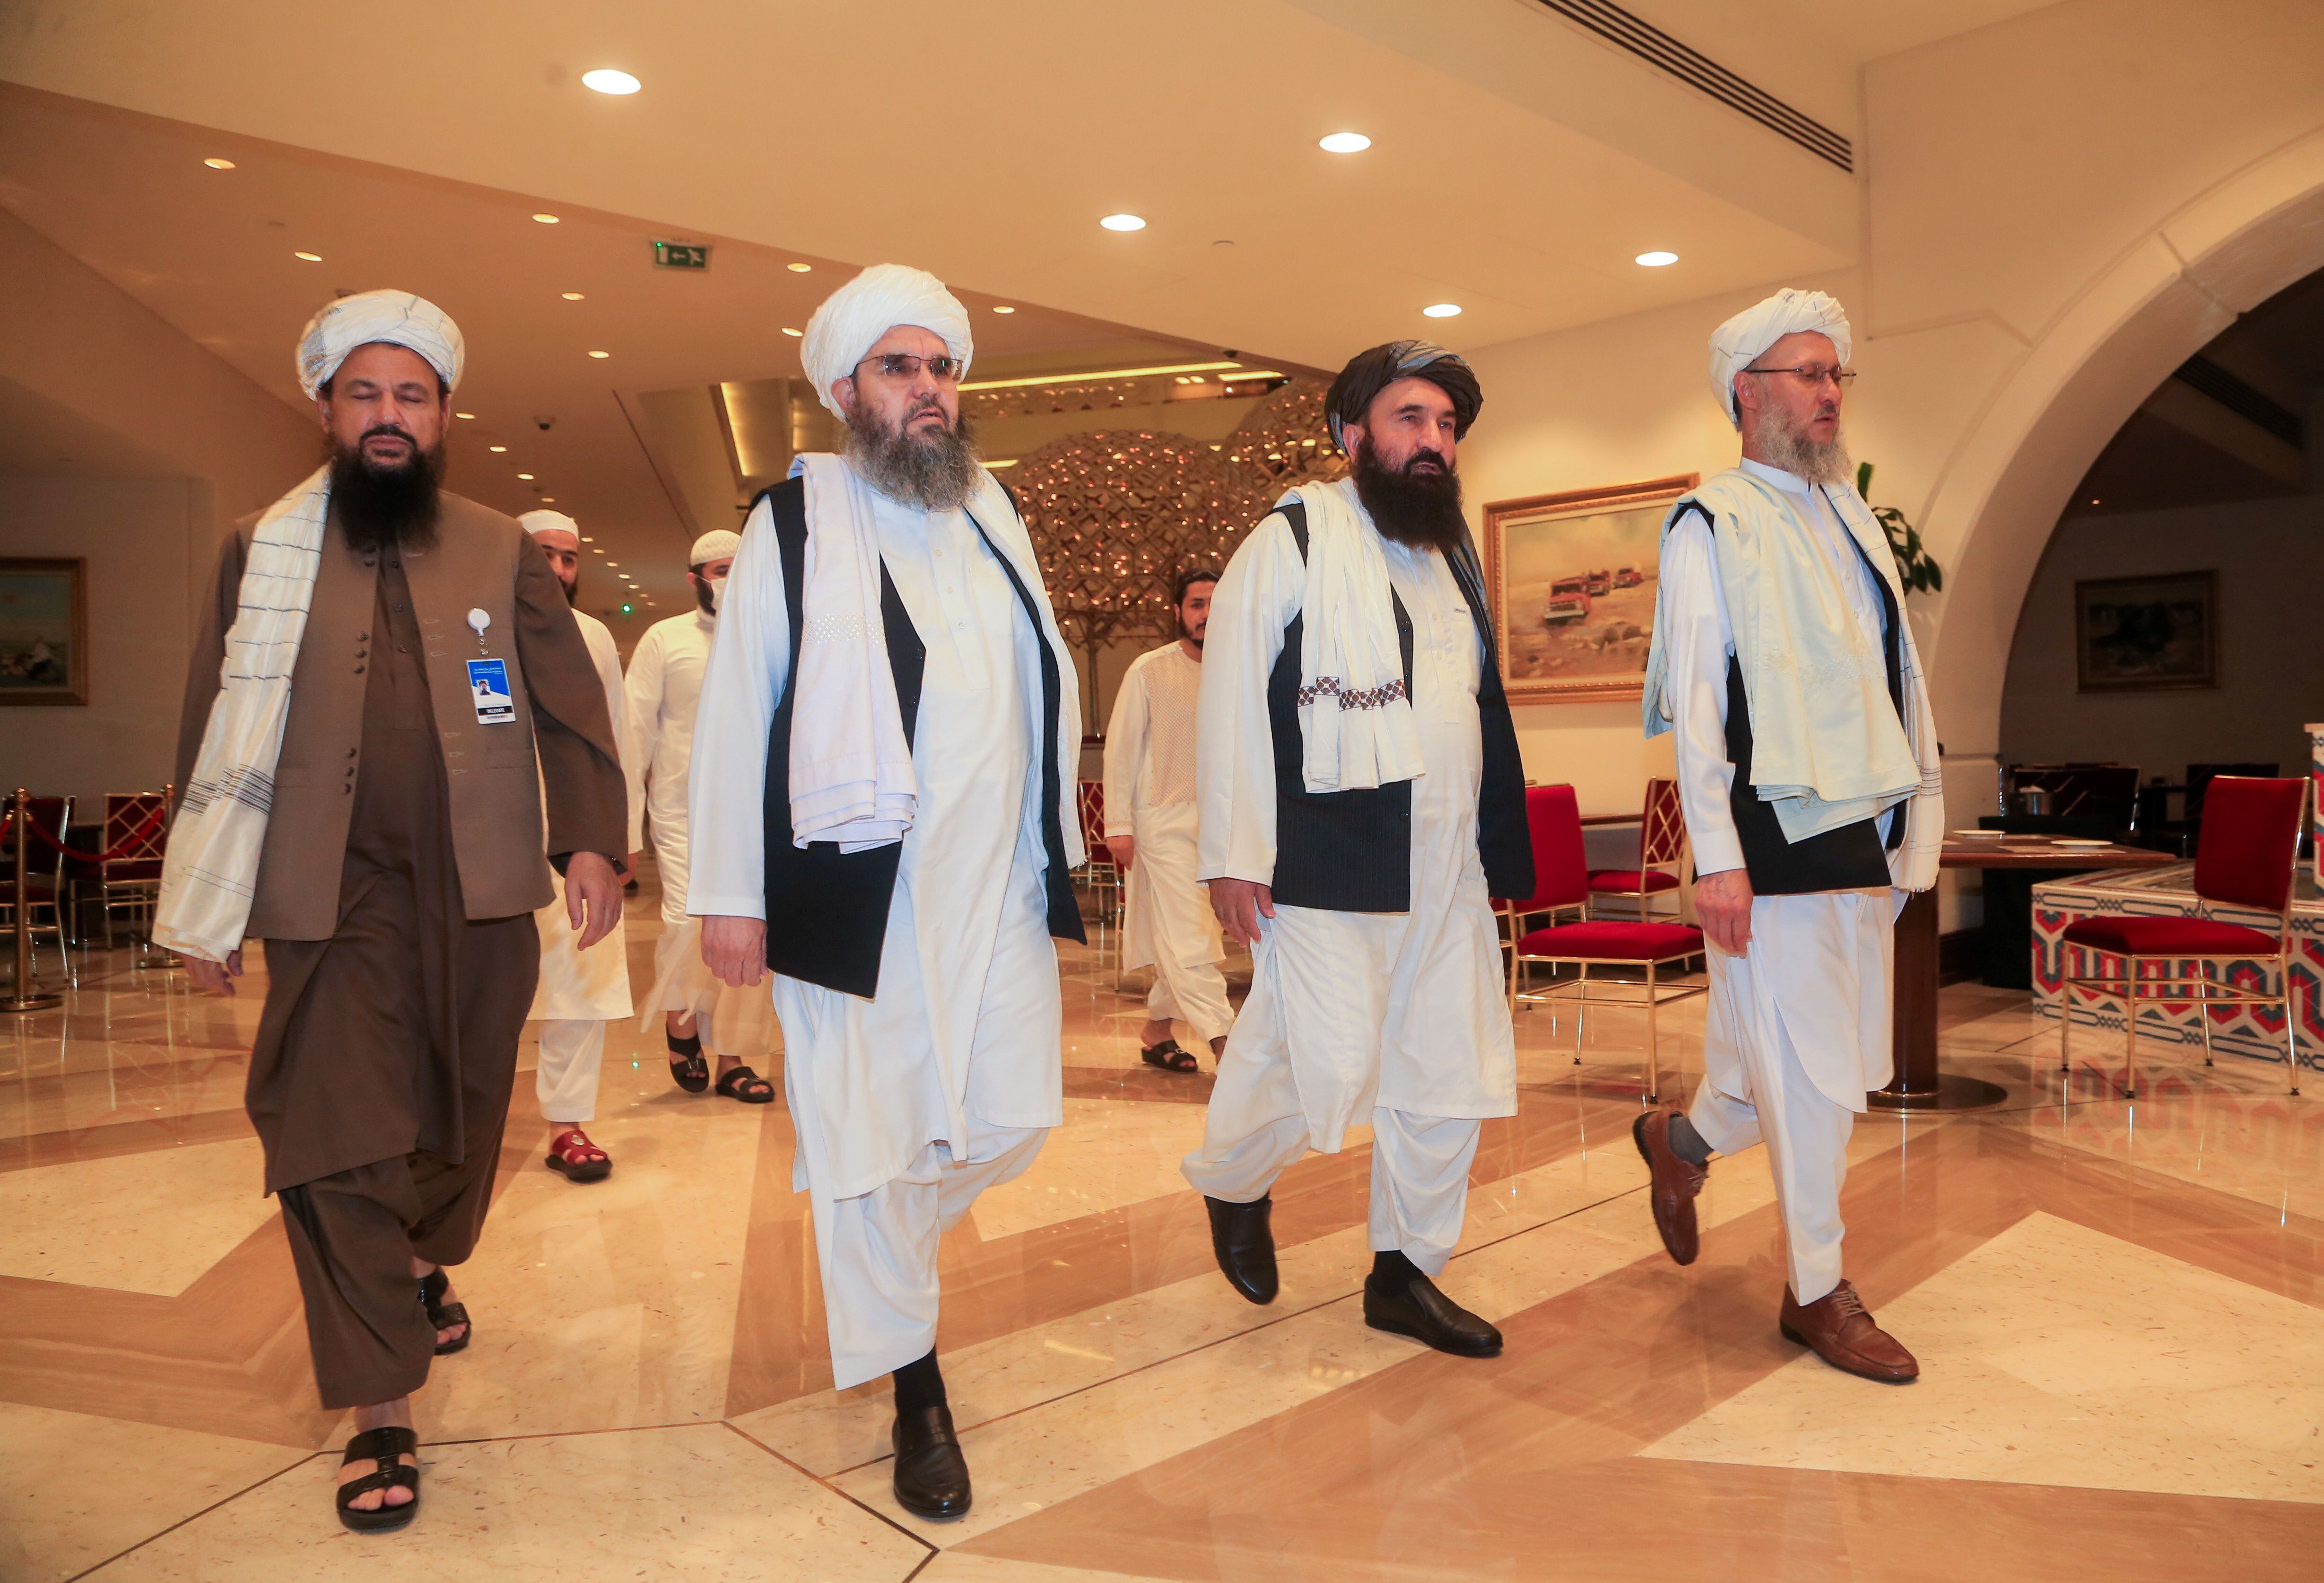 El equipo negociador talibán llega a las conversaciones de paz afganas en Doha, Qatar, con Abdul Salam Hanafi a la cabeza (Foto: REUTERS)